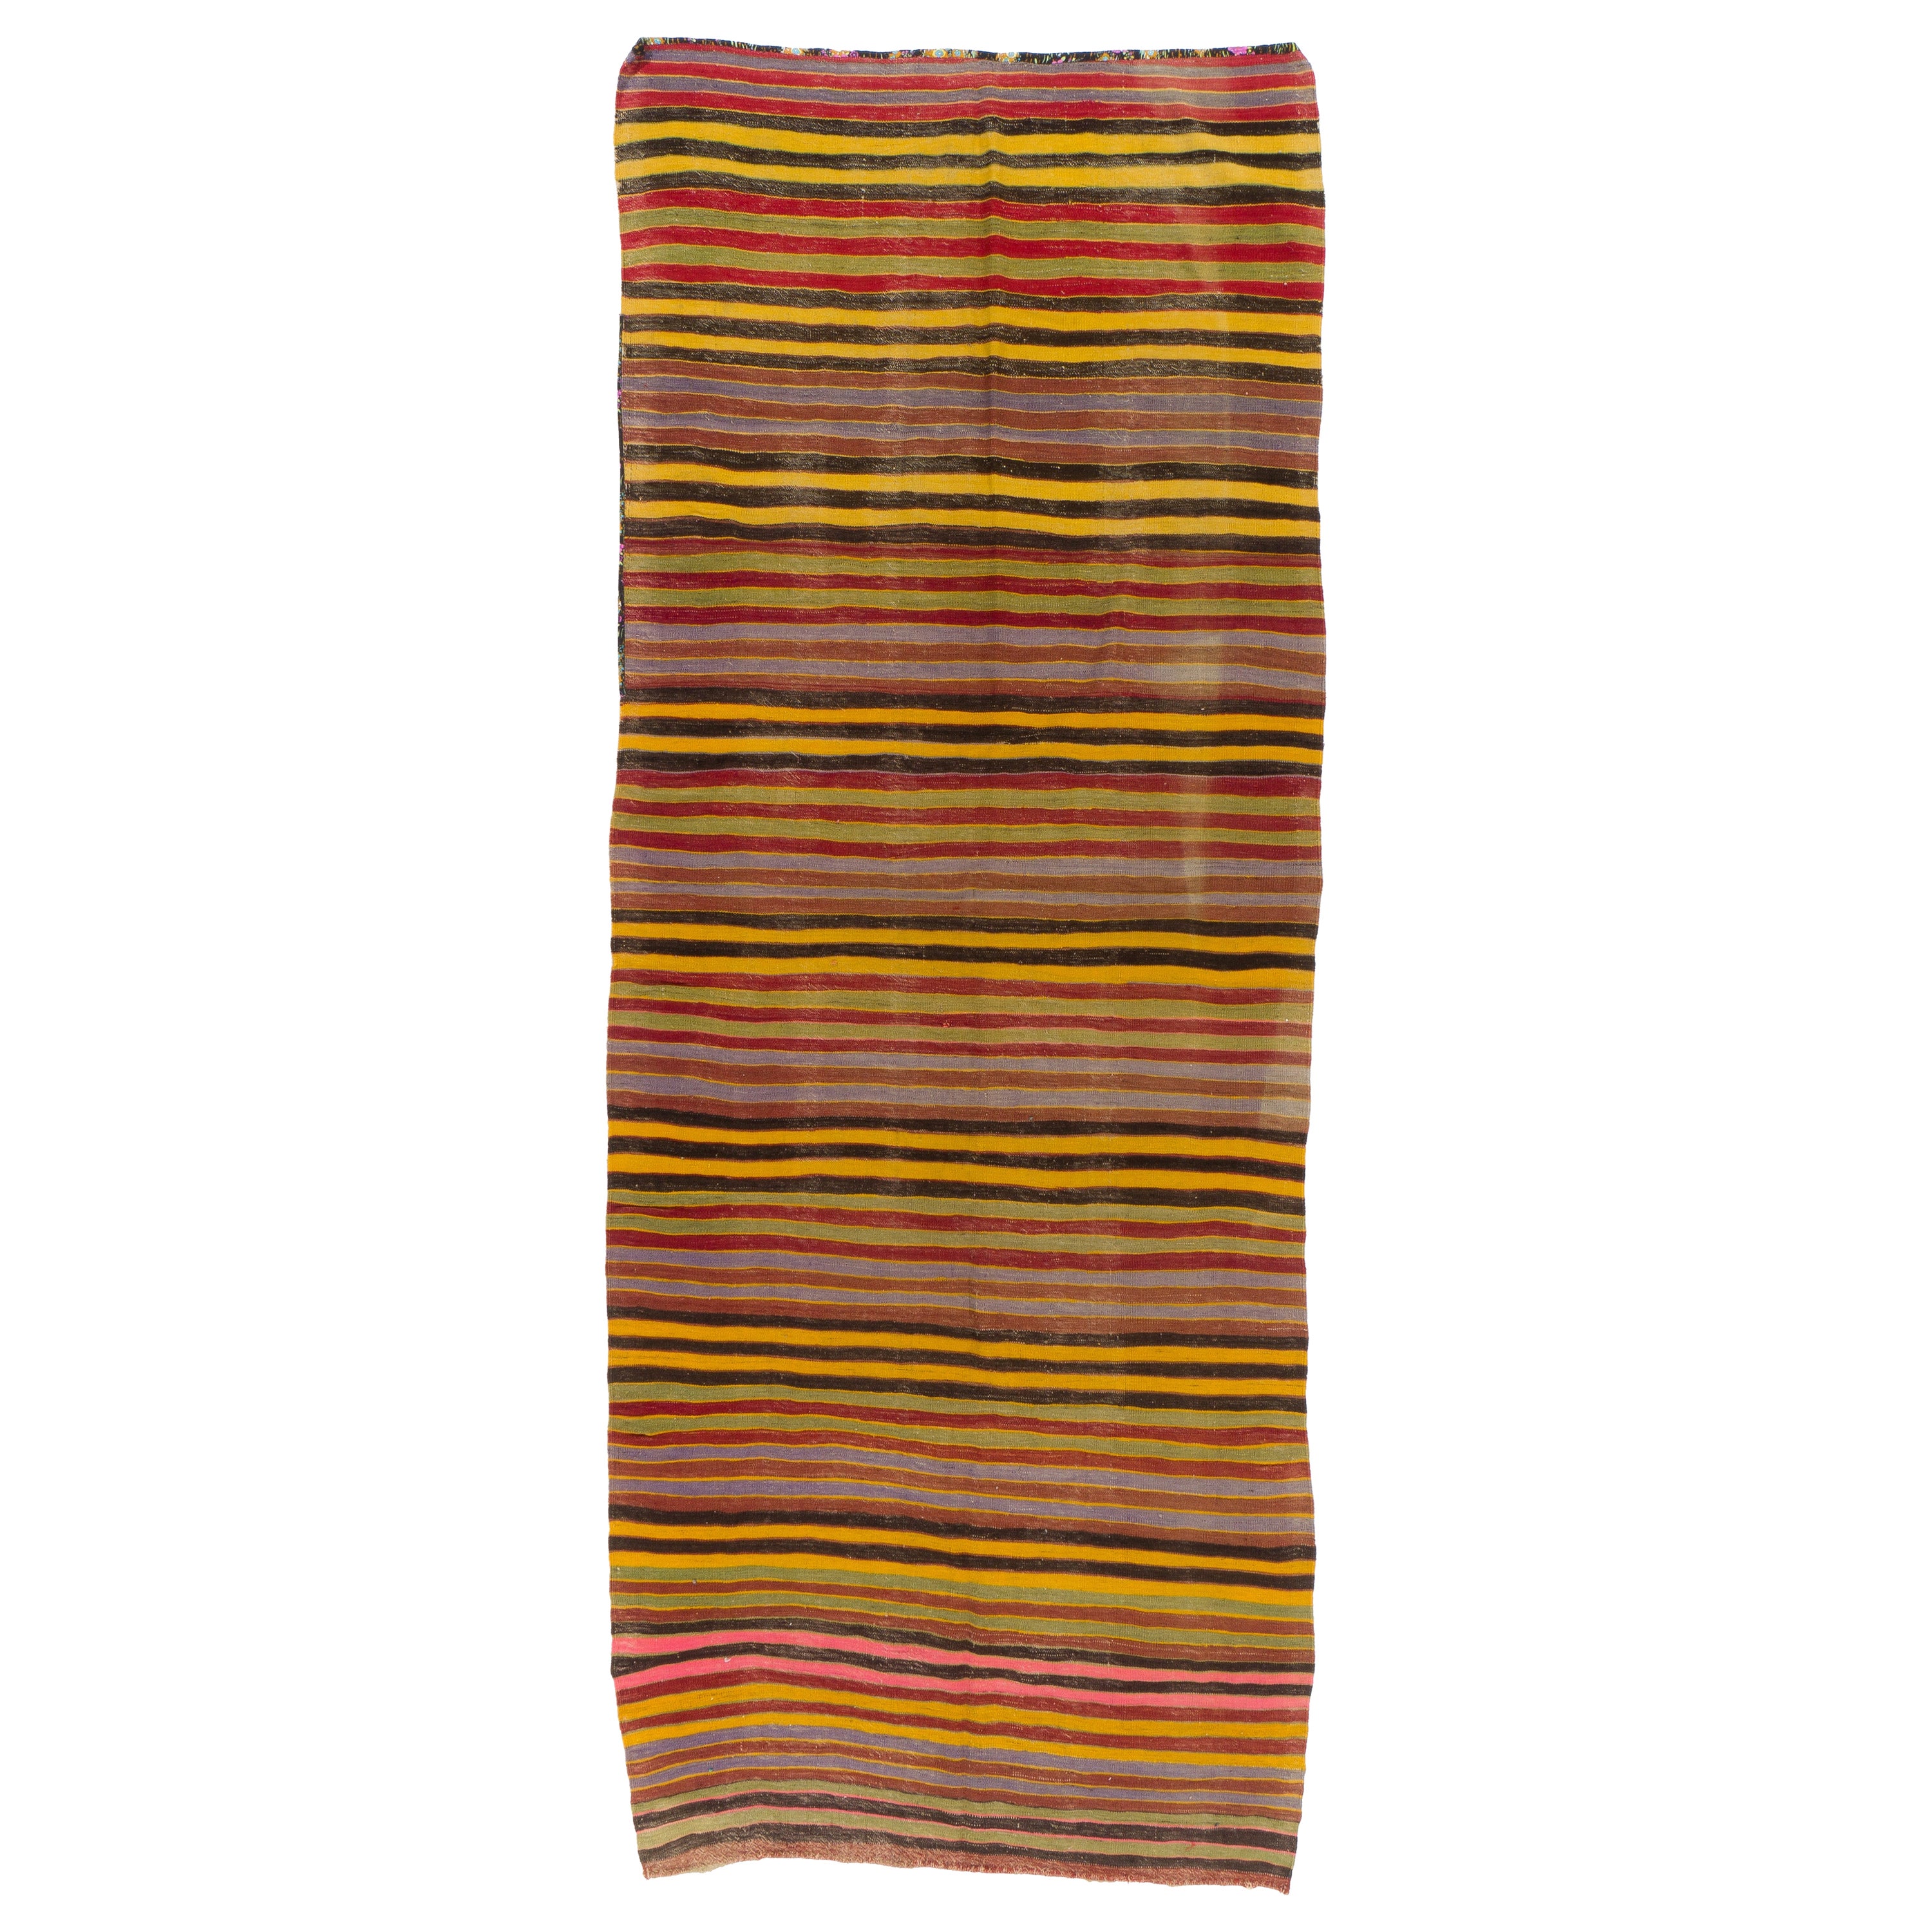 4.7x12.2 Ft Multicolored Vintage Banded Handmade Wool Turkish Kilim 'Flat Weave' For Sale